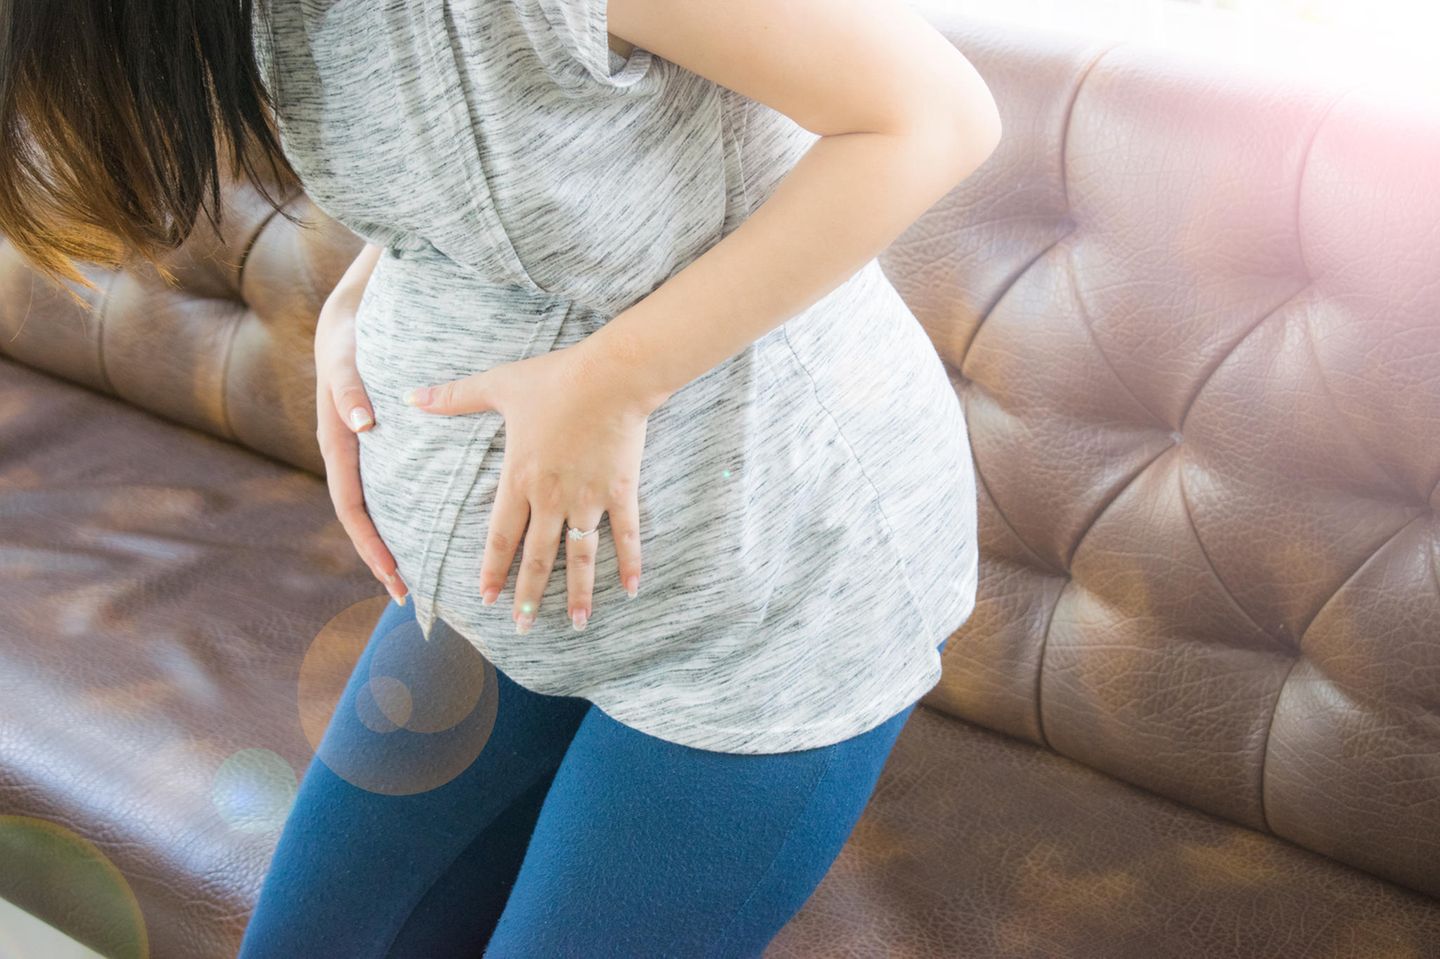 Alabama: Schwangere hält sich vor Schmerzen den Bauch